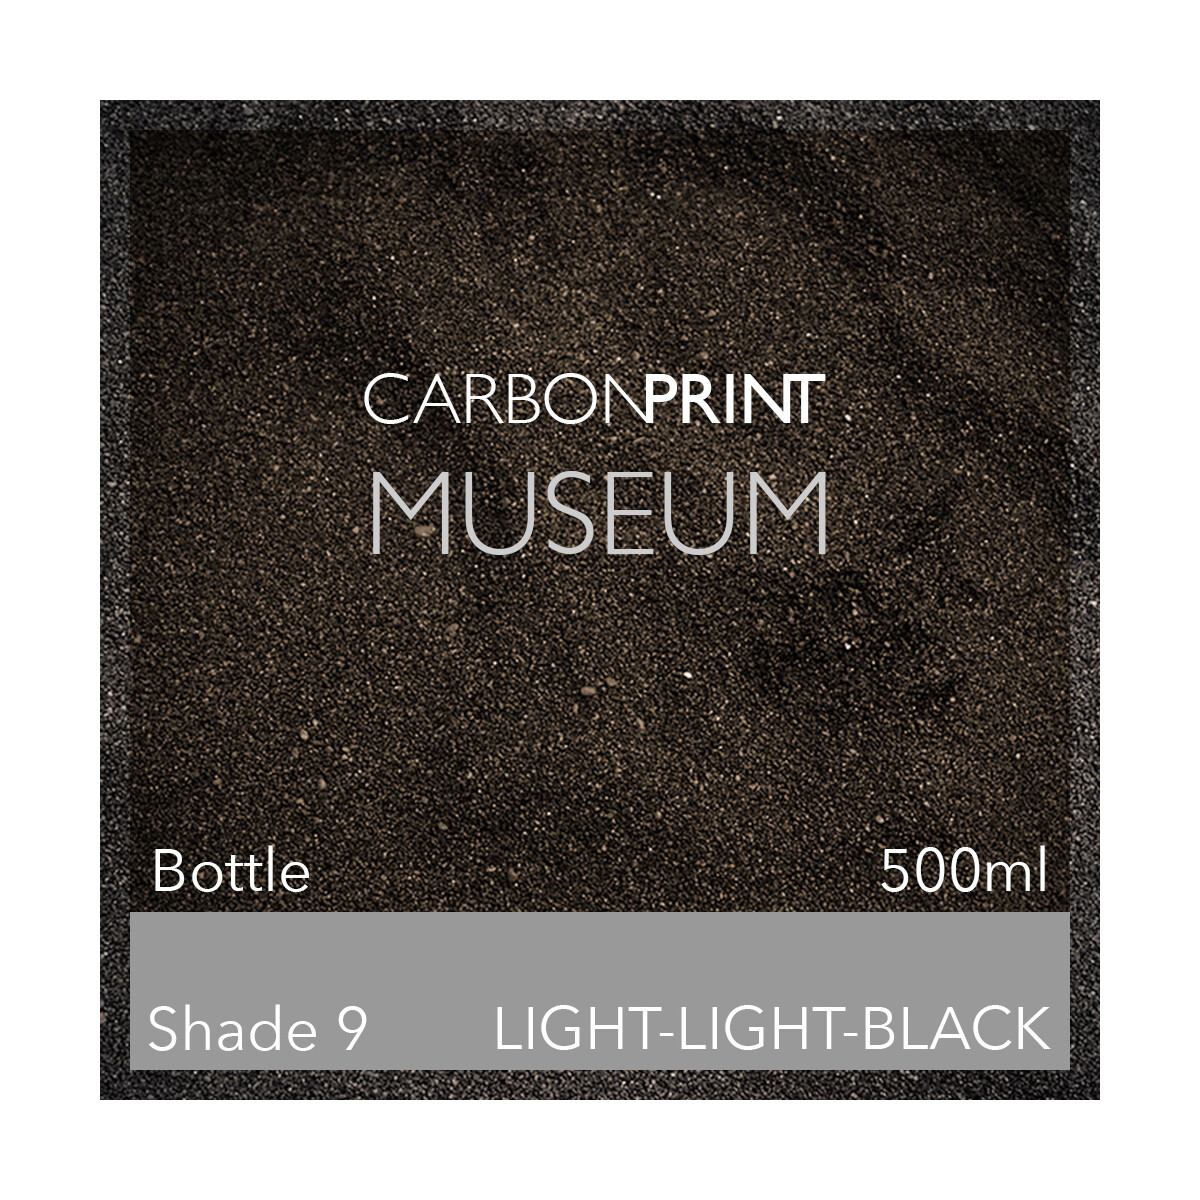 Carbonprint Museum Shade9 Channel LLK / LGY 500ml